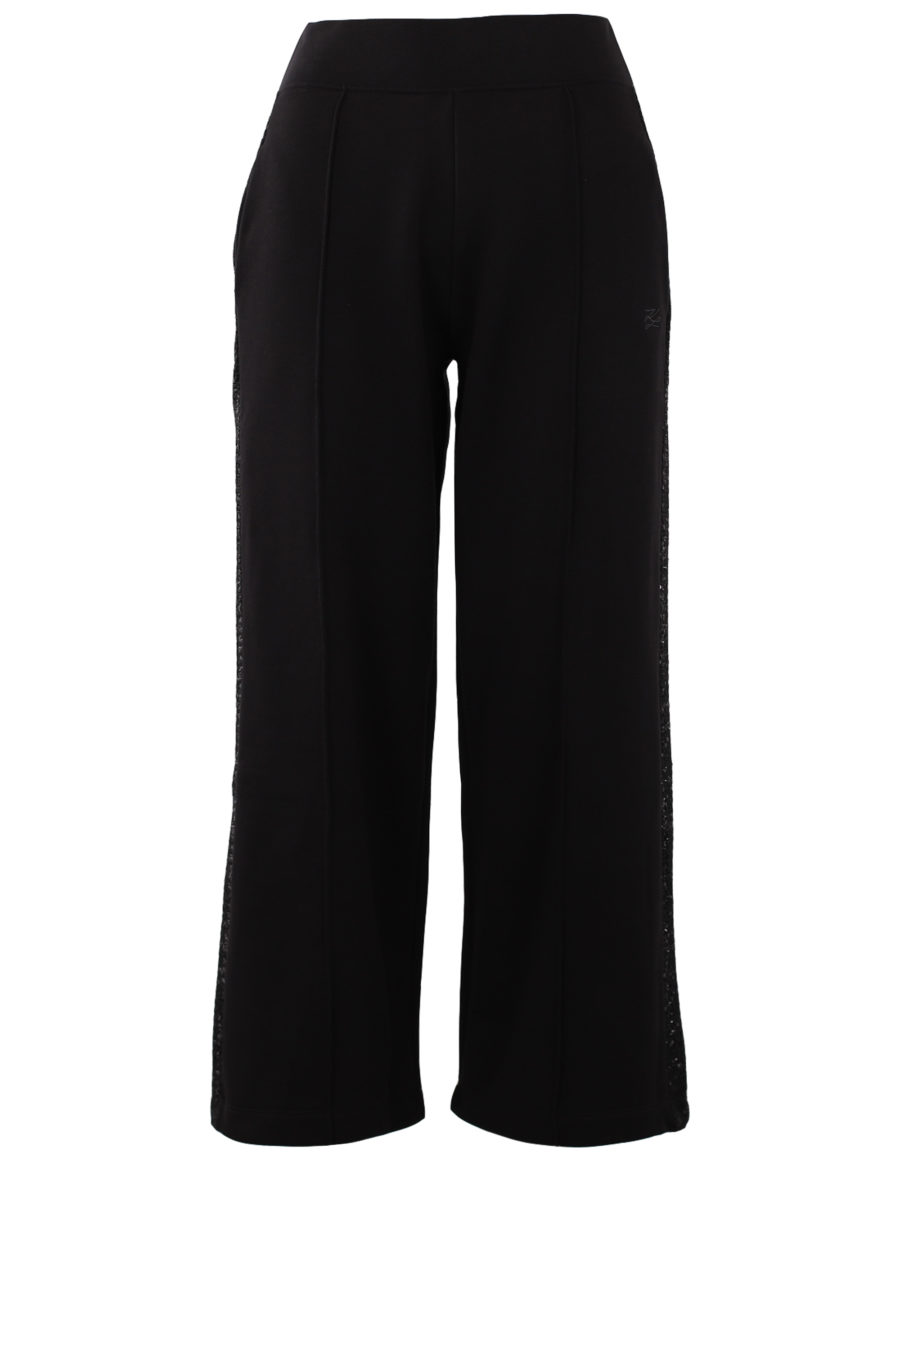 Pantalon noir avec ruban bouclé - IMG 0373